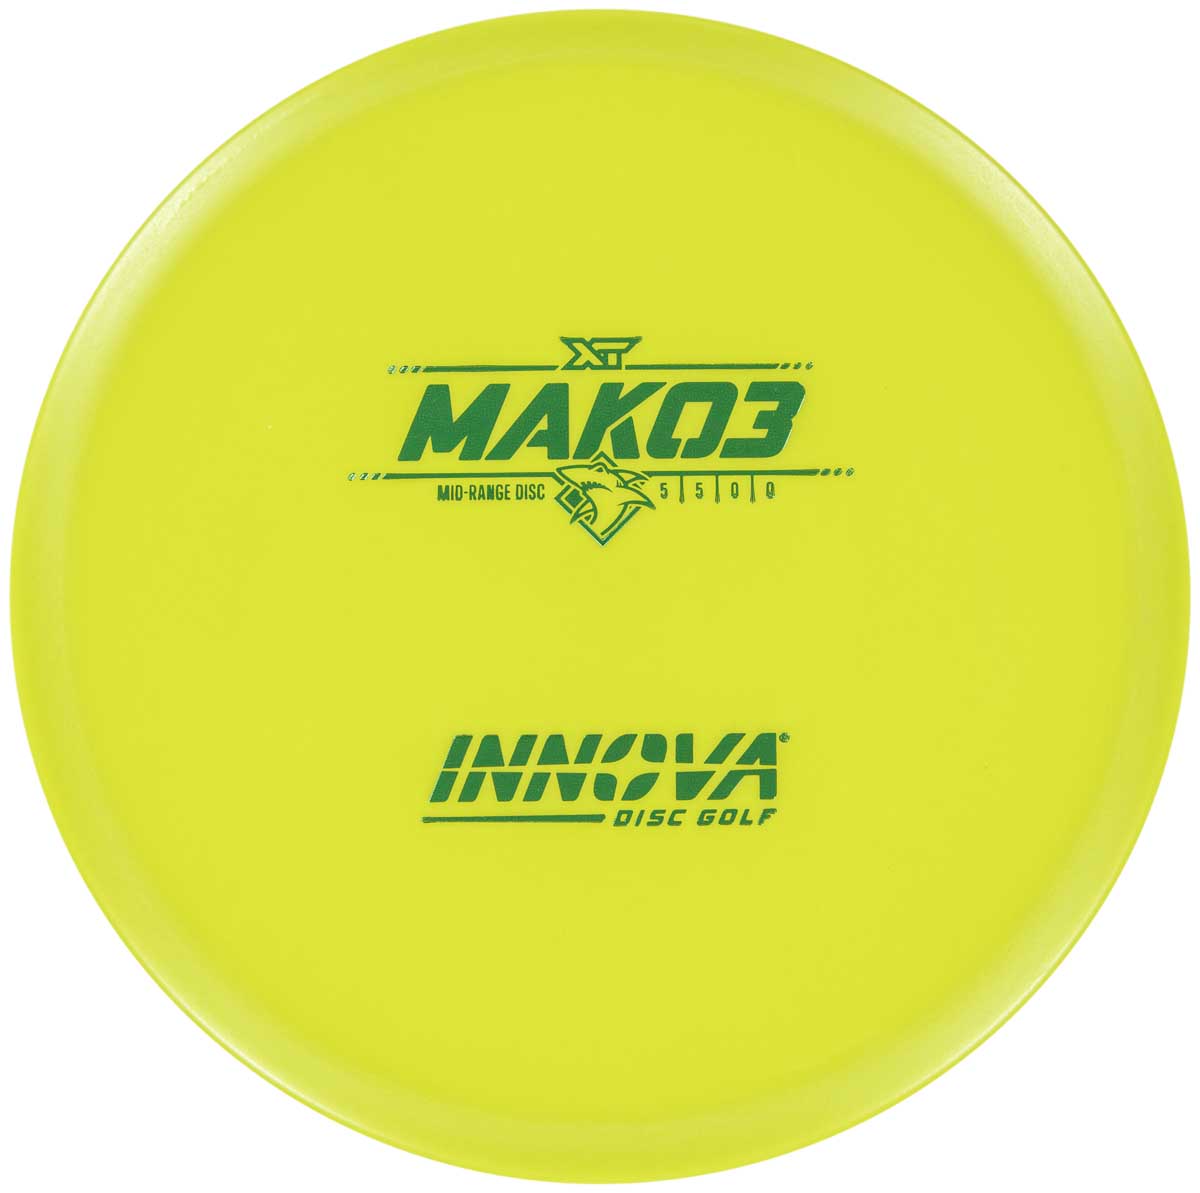 Innova XT Mako3 - Neutral Flying Mid Range Disc